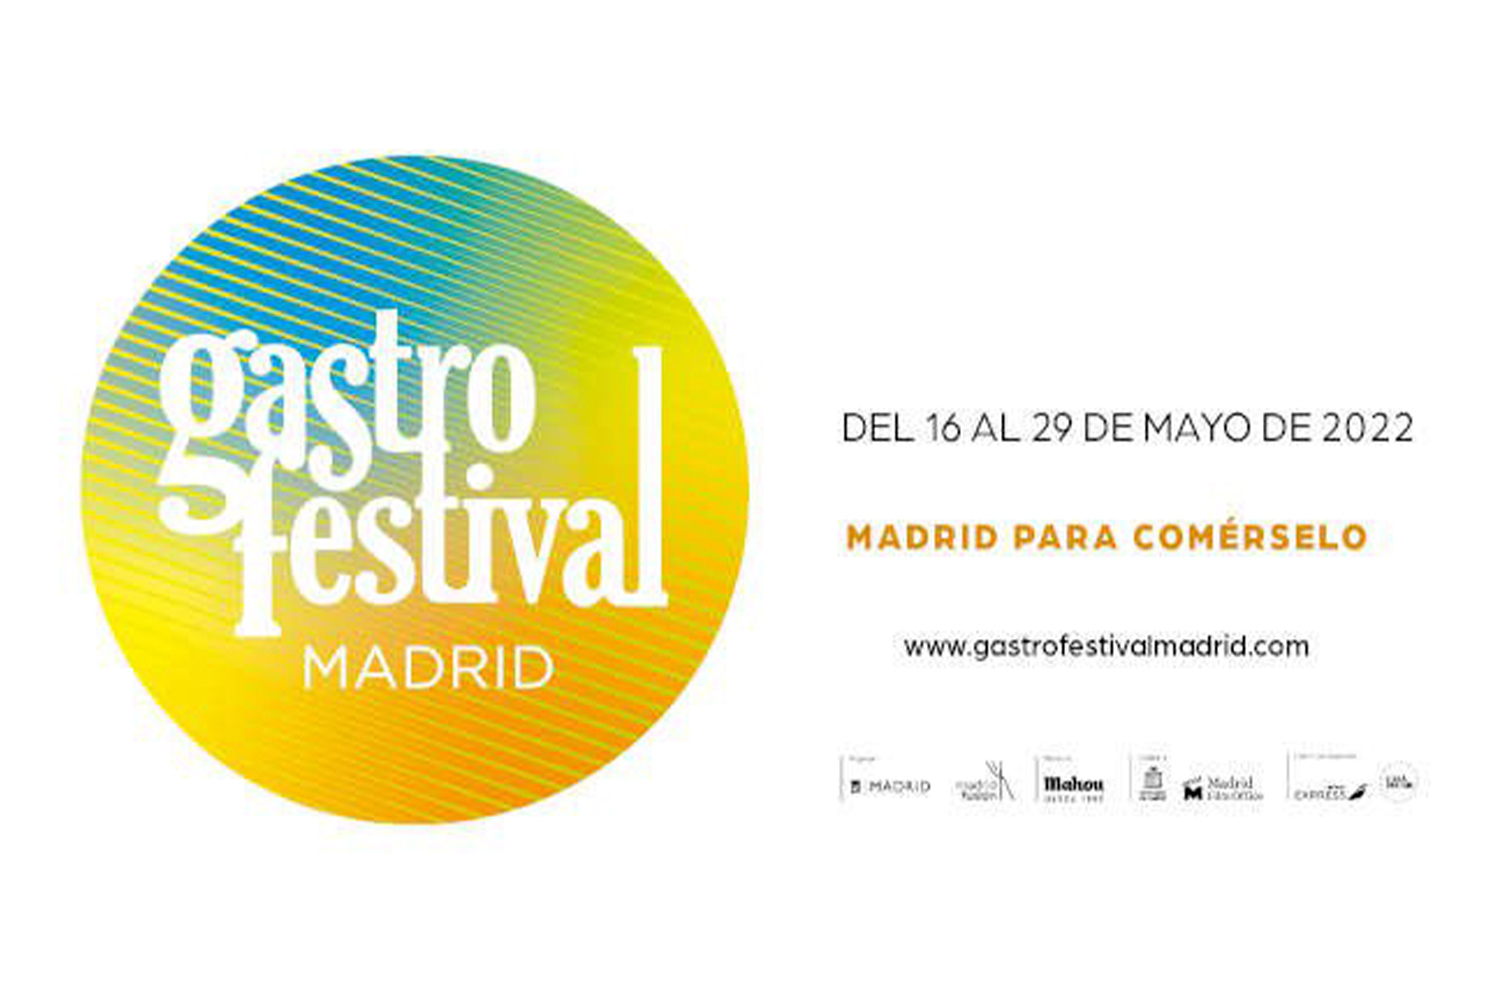 Gastrofestival 2022 poster